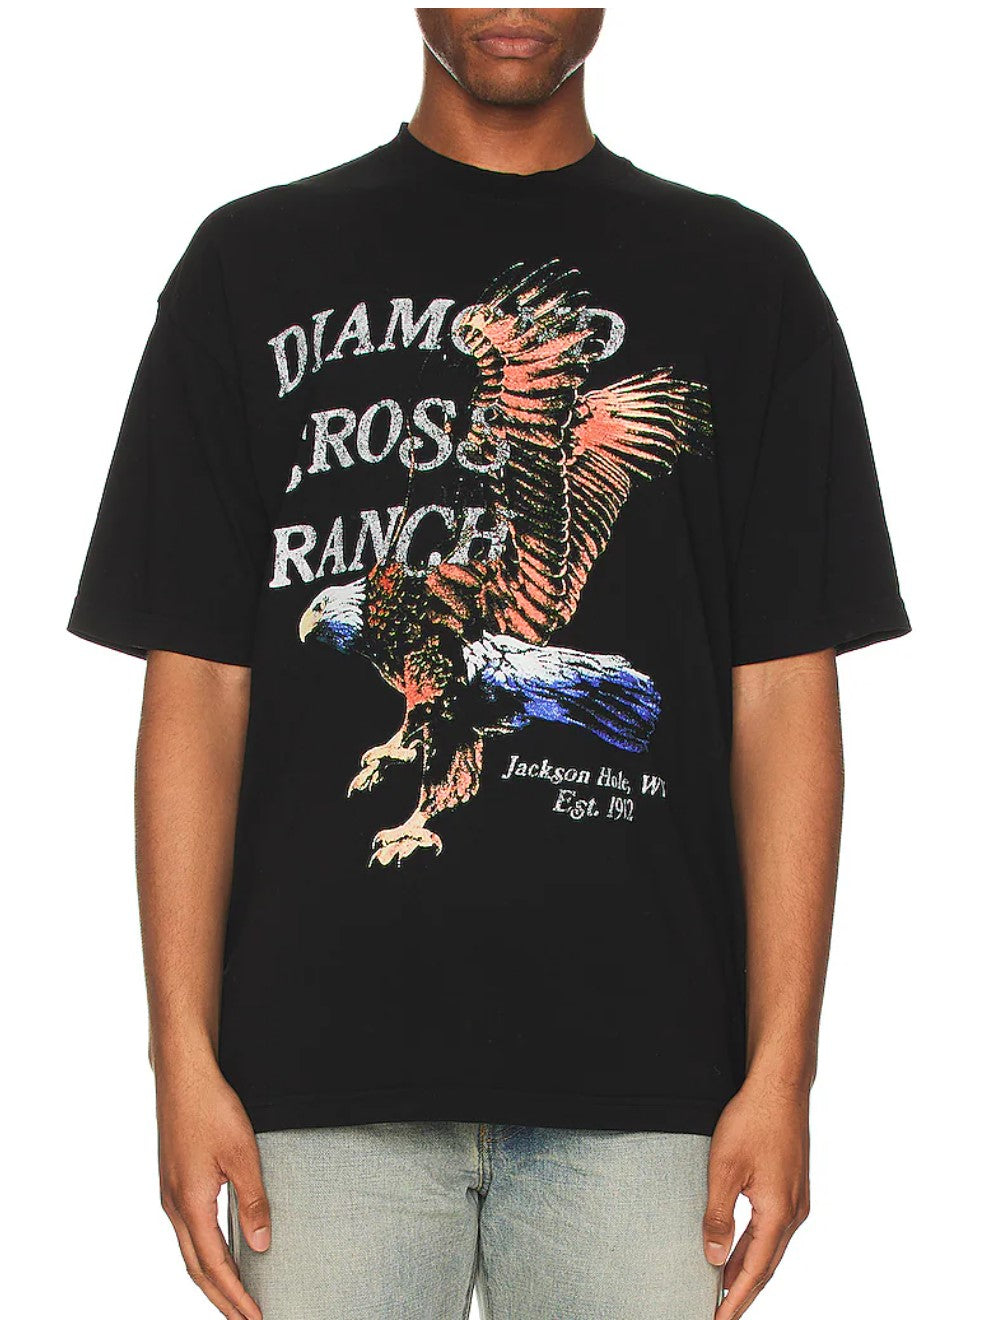 Diamond Cross Ranch Black VINTAGE T-Shirt 